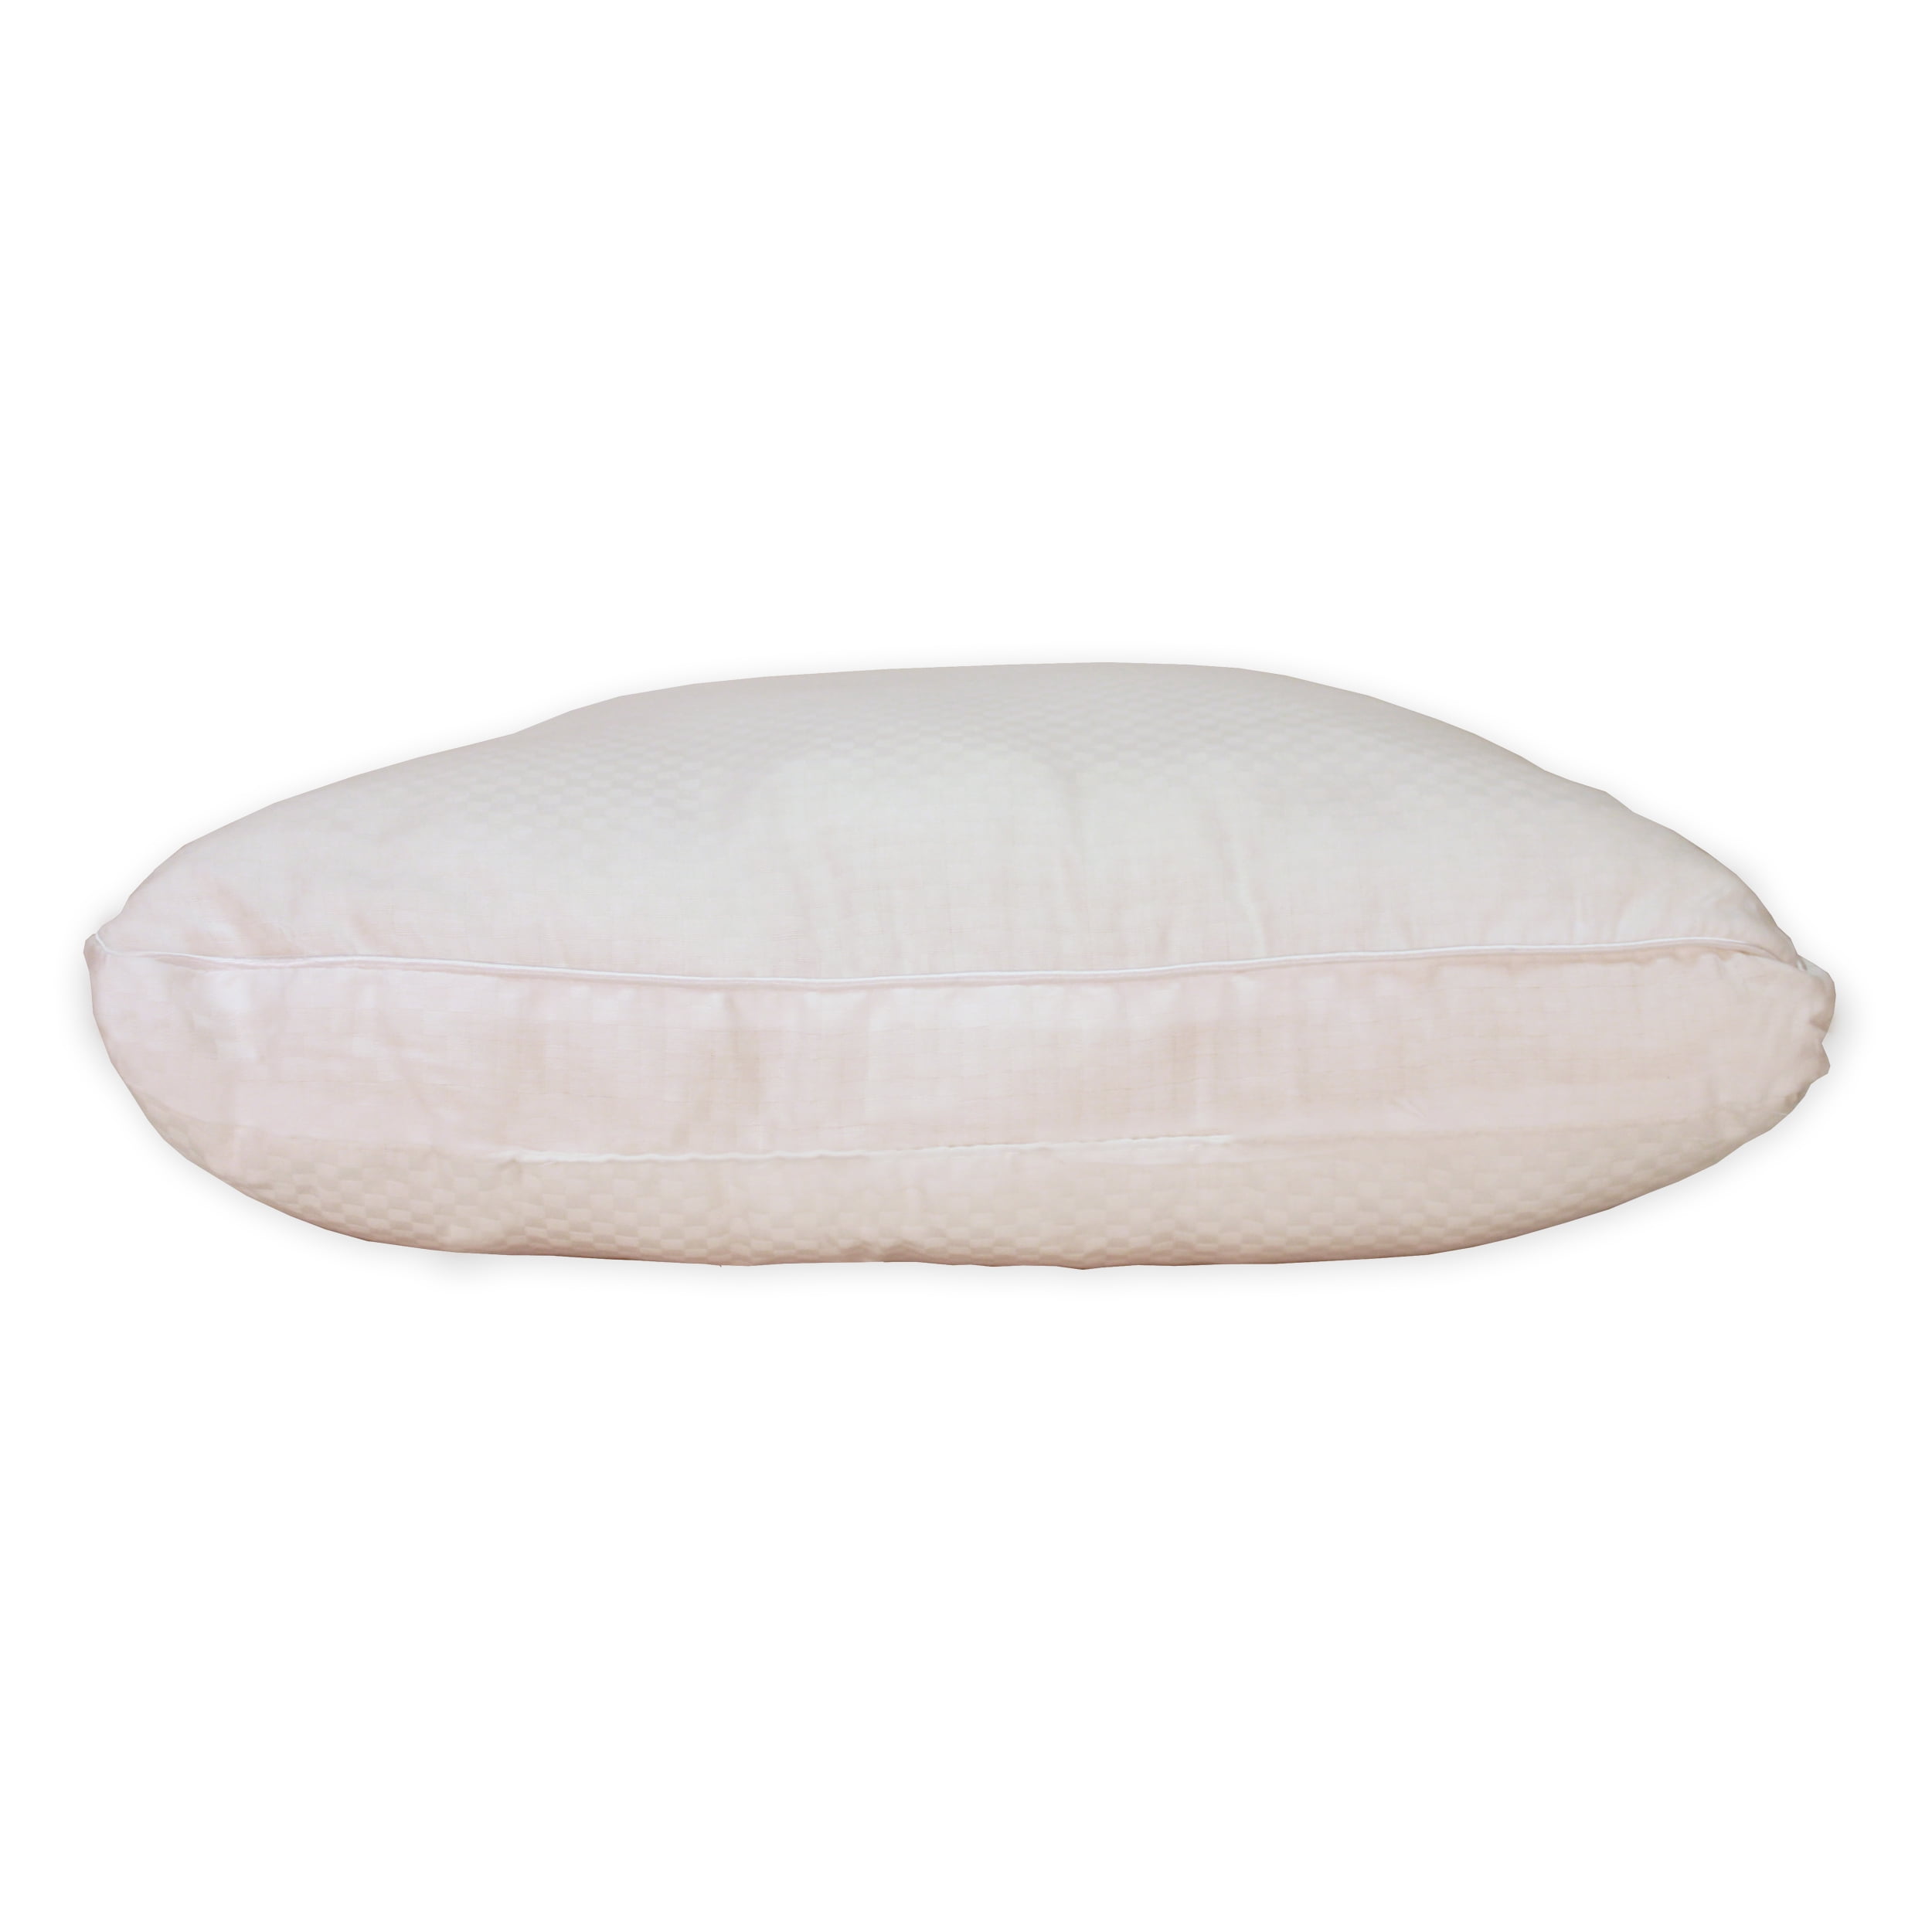 Pillow Insert - 14” x 24 – Ecuadane